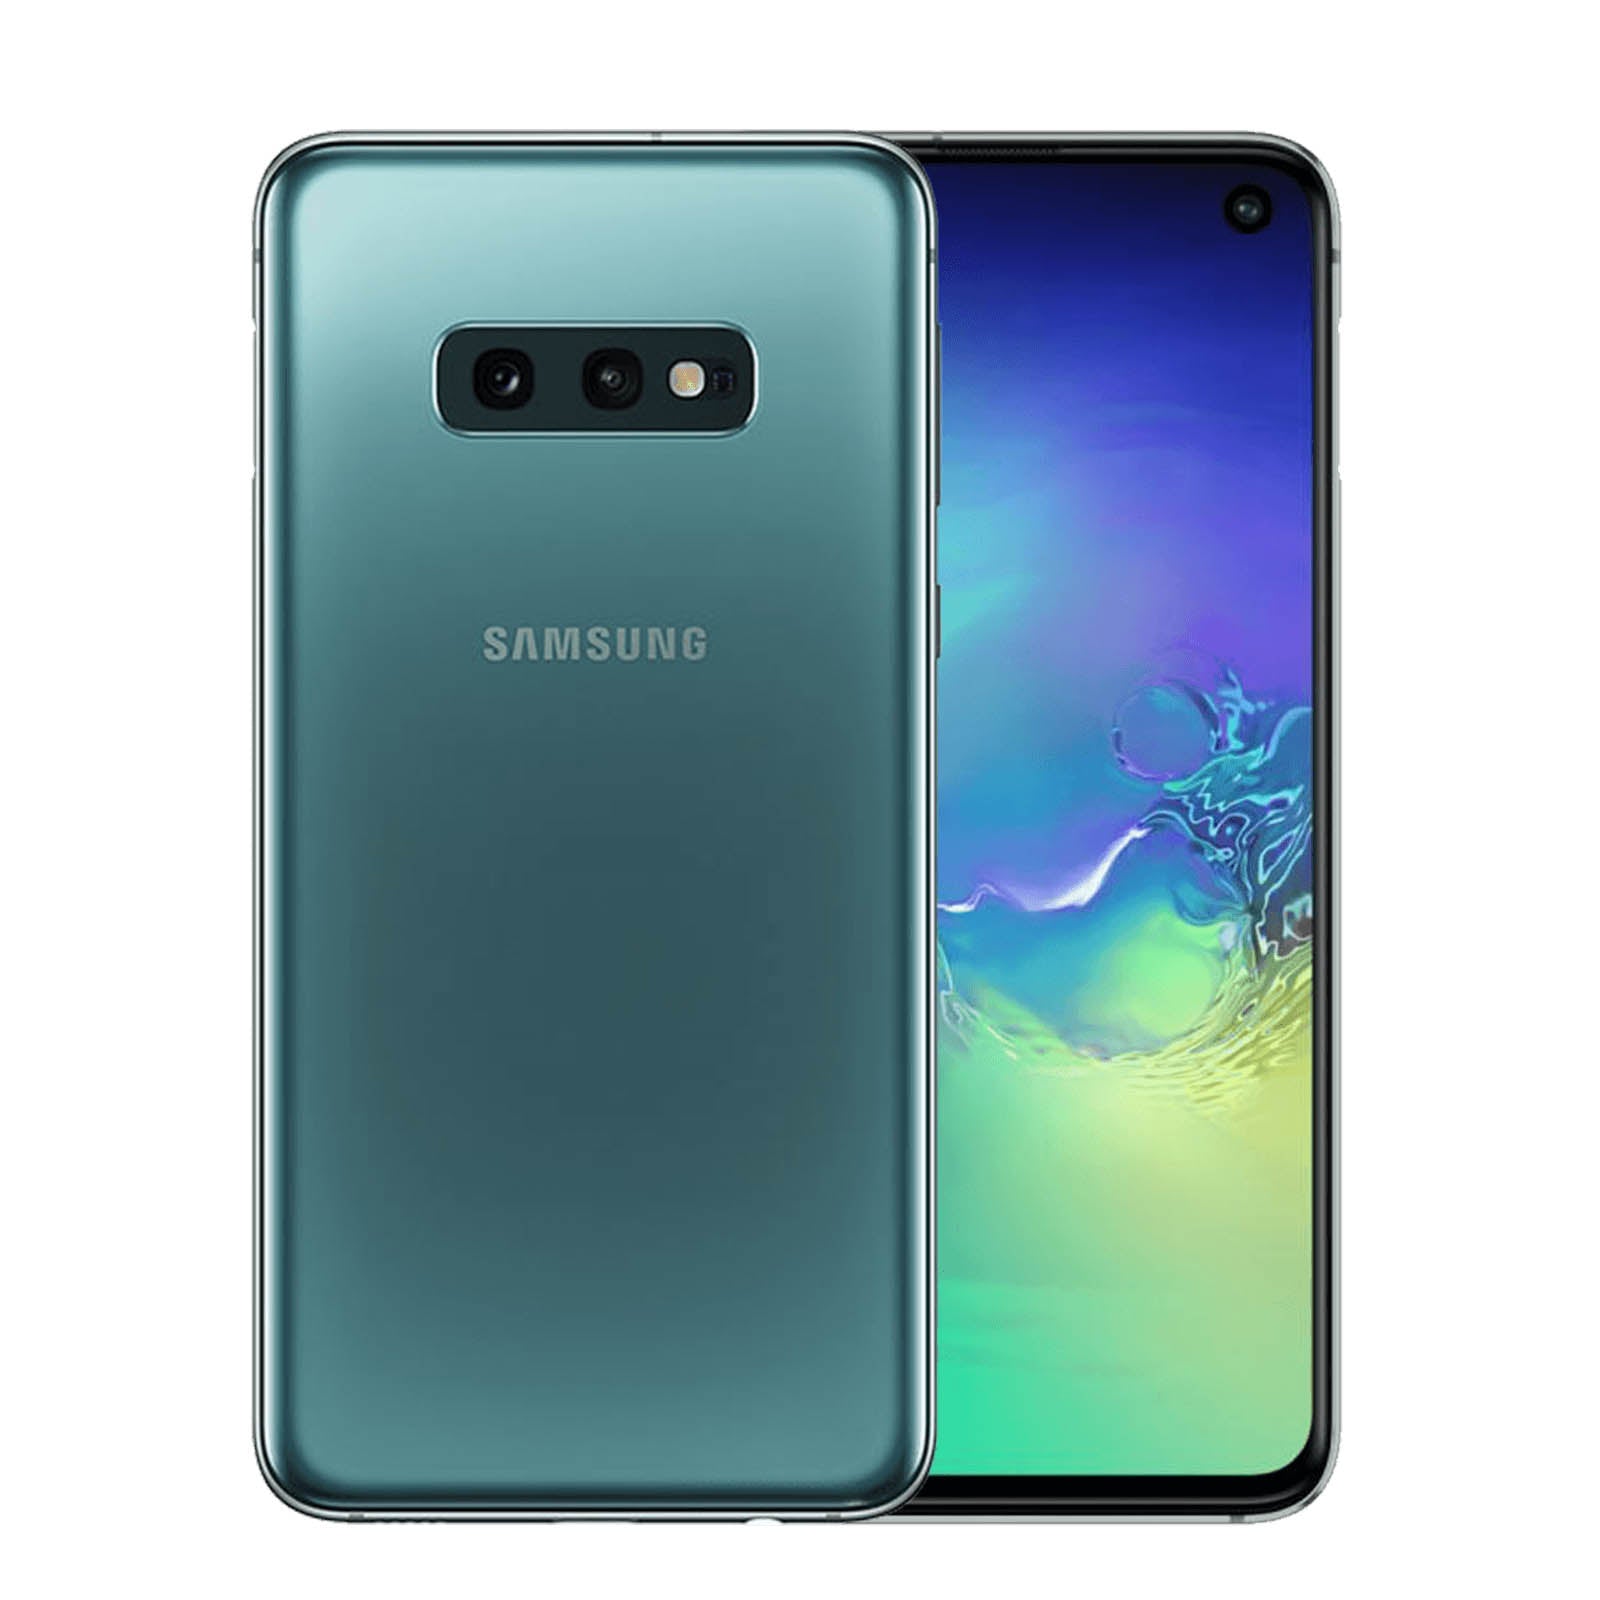 Samsung Galaxy S10E 128GB Prism Green Good - Unlocked